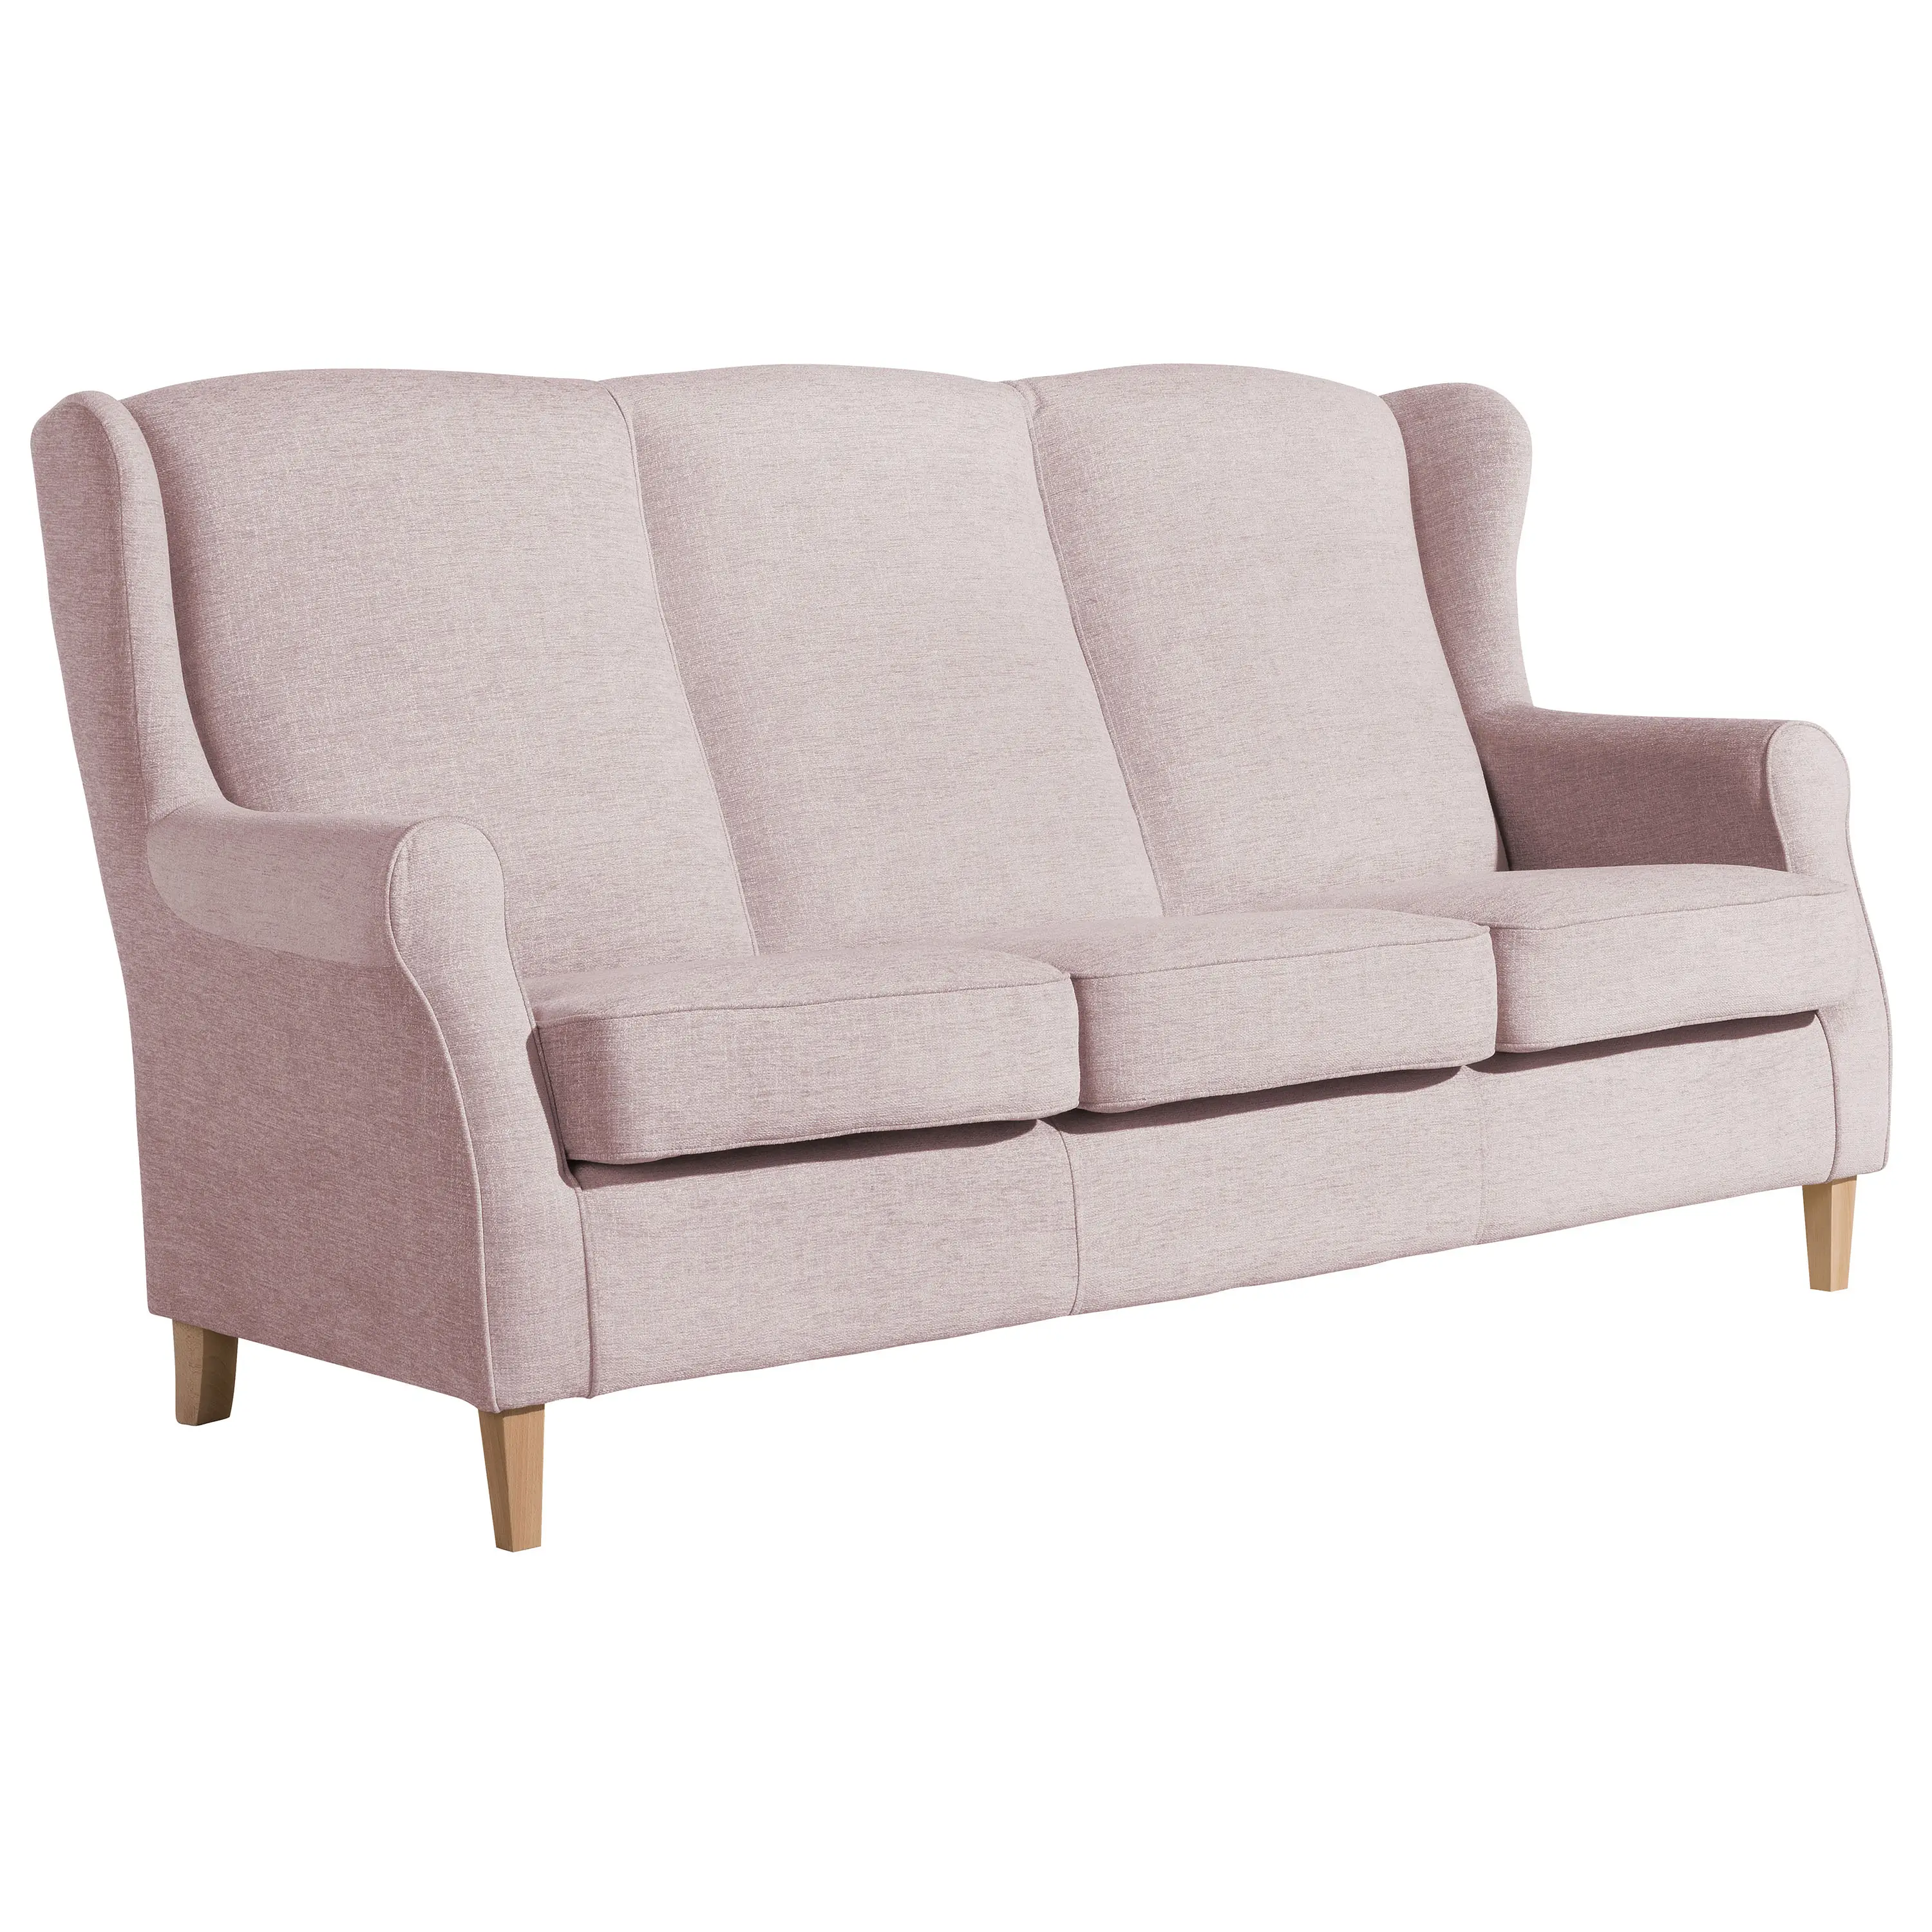 3-Sitzer Lorris Sofa